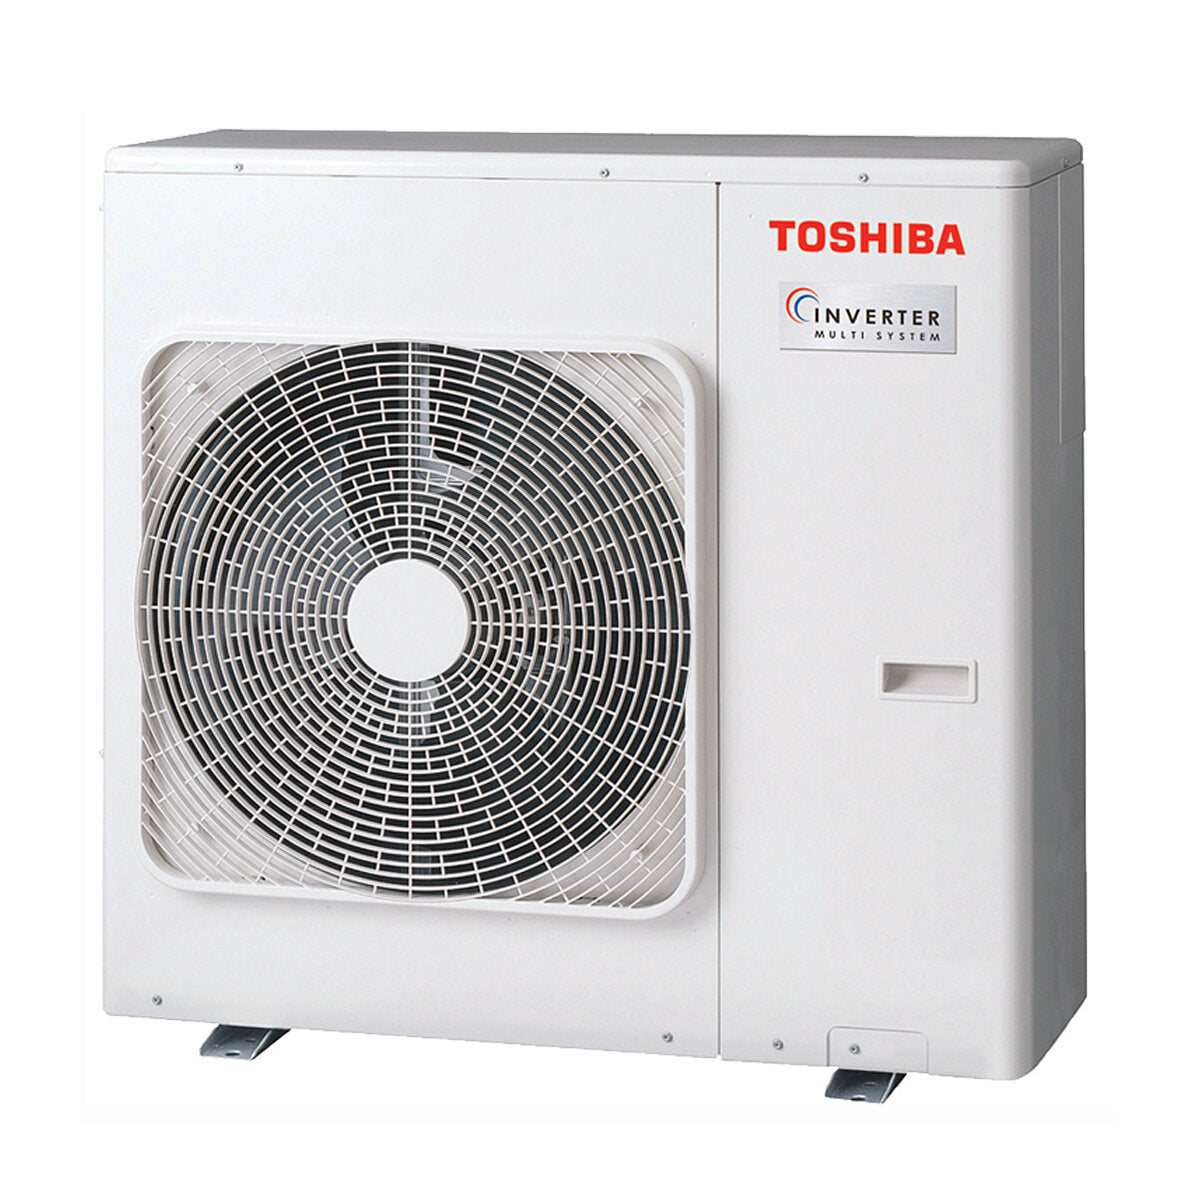 Toshiba Ductable Air Conditioner U2 penta split 9000 + 9000 + 12000 + 12000 + 12000 BTU inverter A ++ outdoor unit 10.0 kW